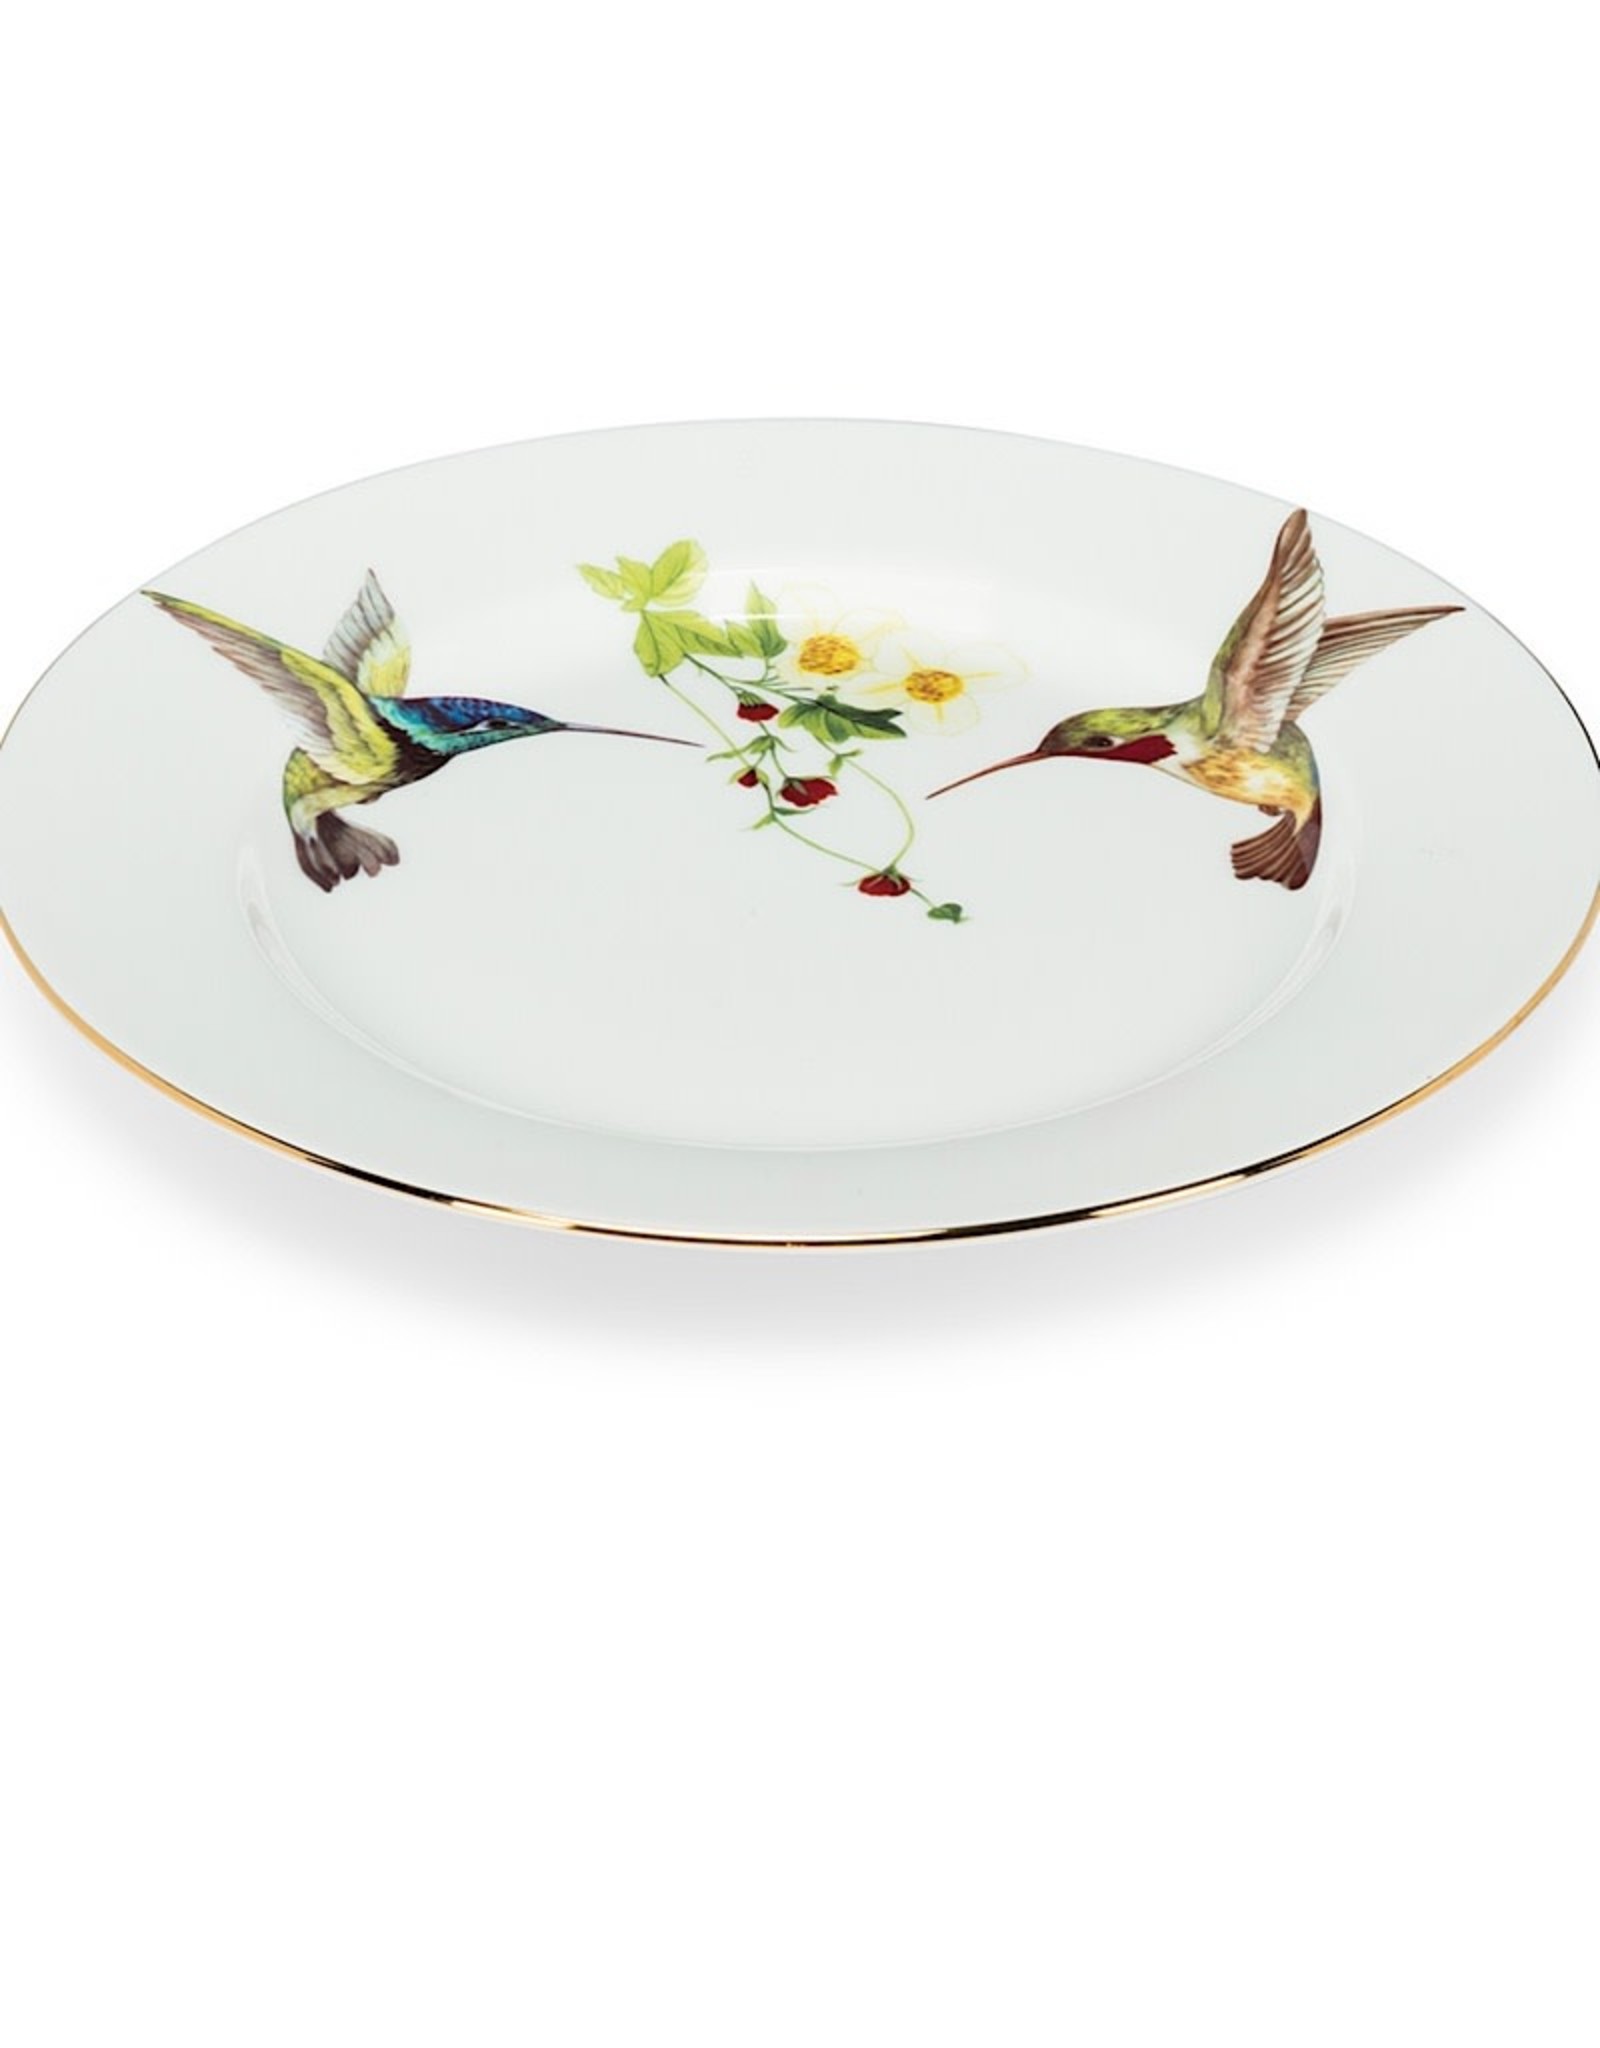 Hummingbird plate